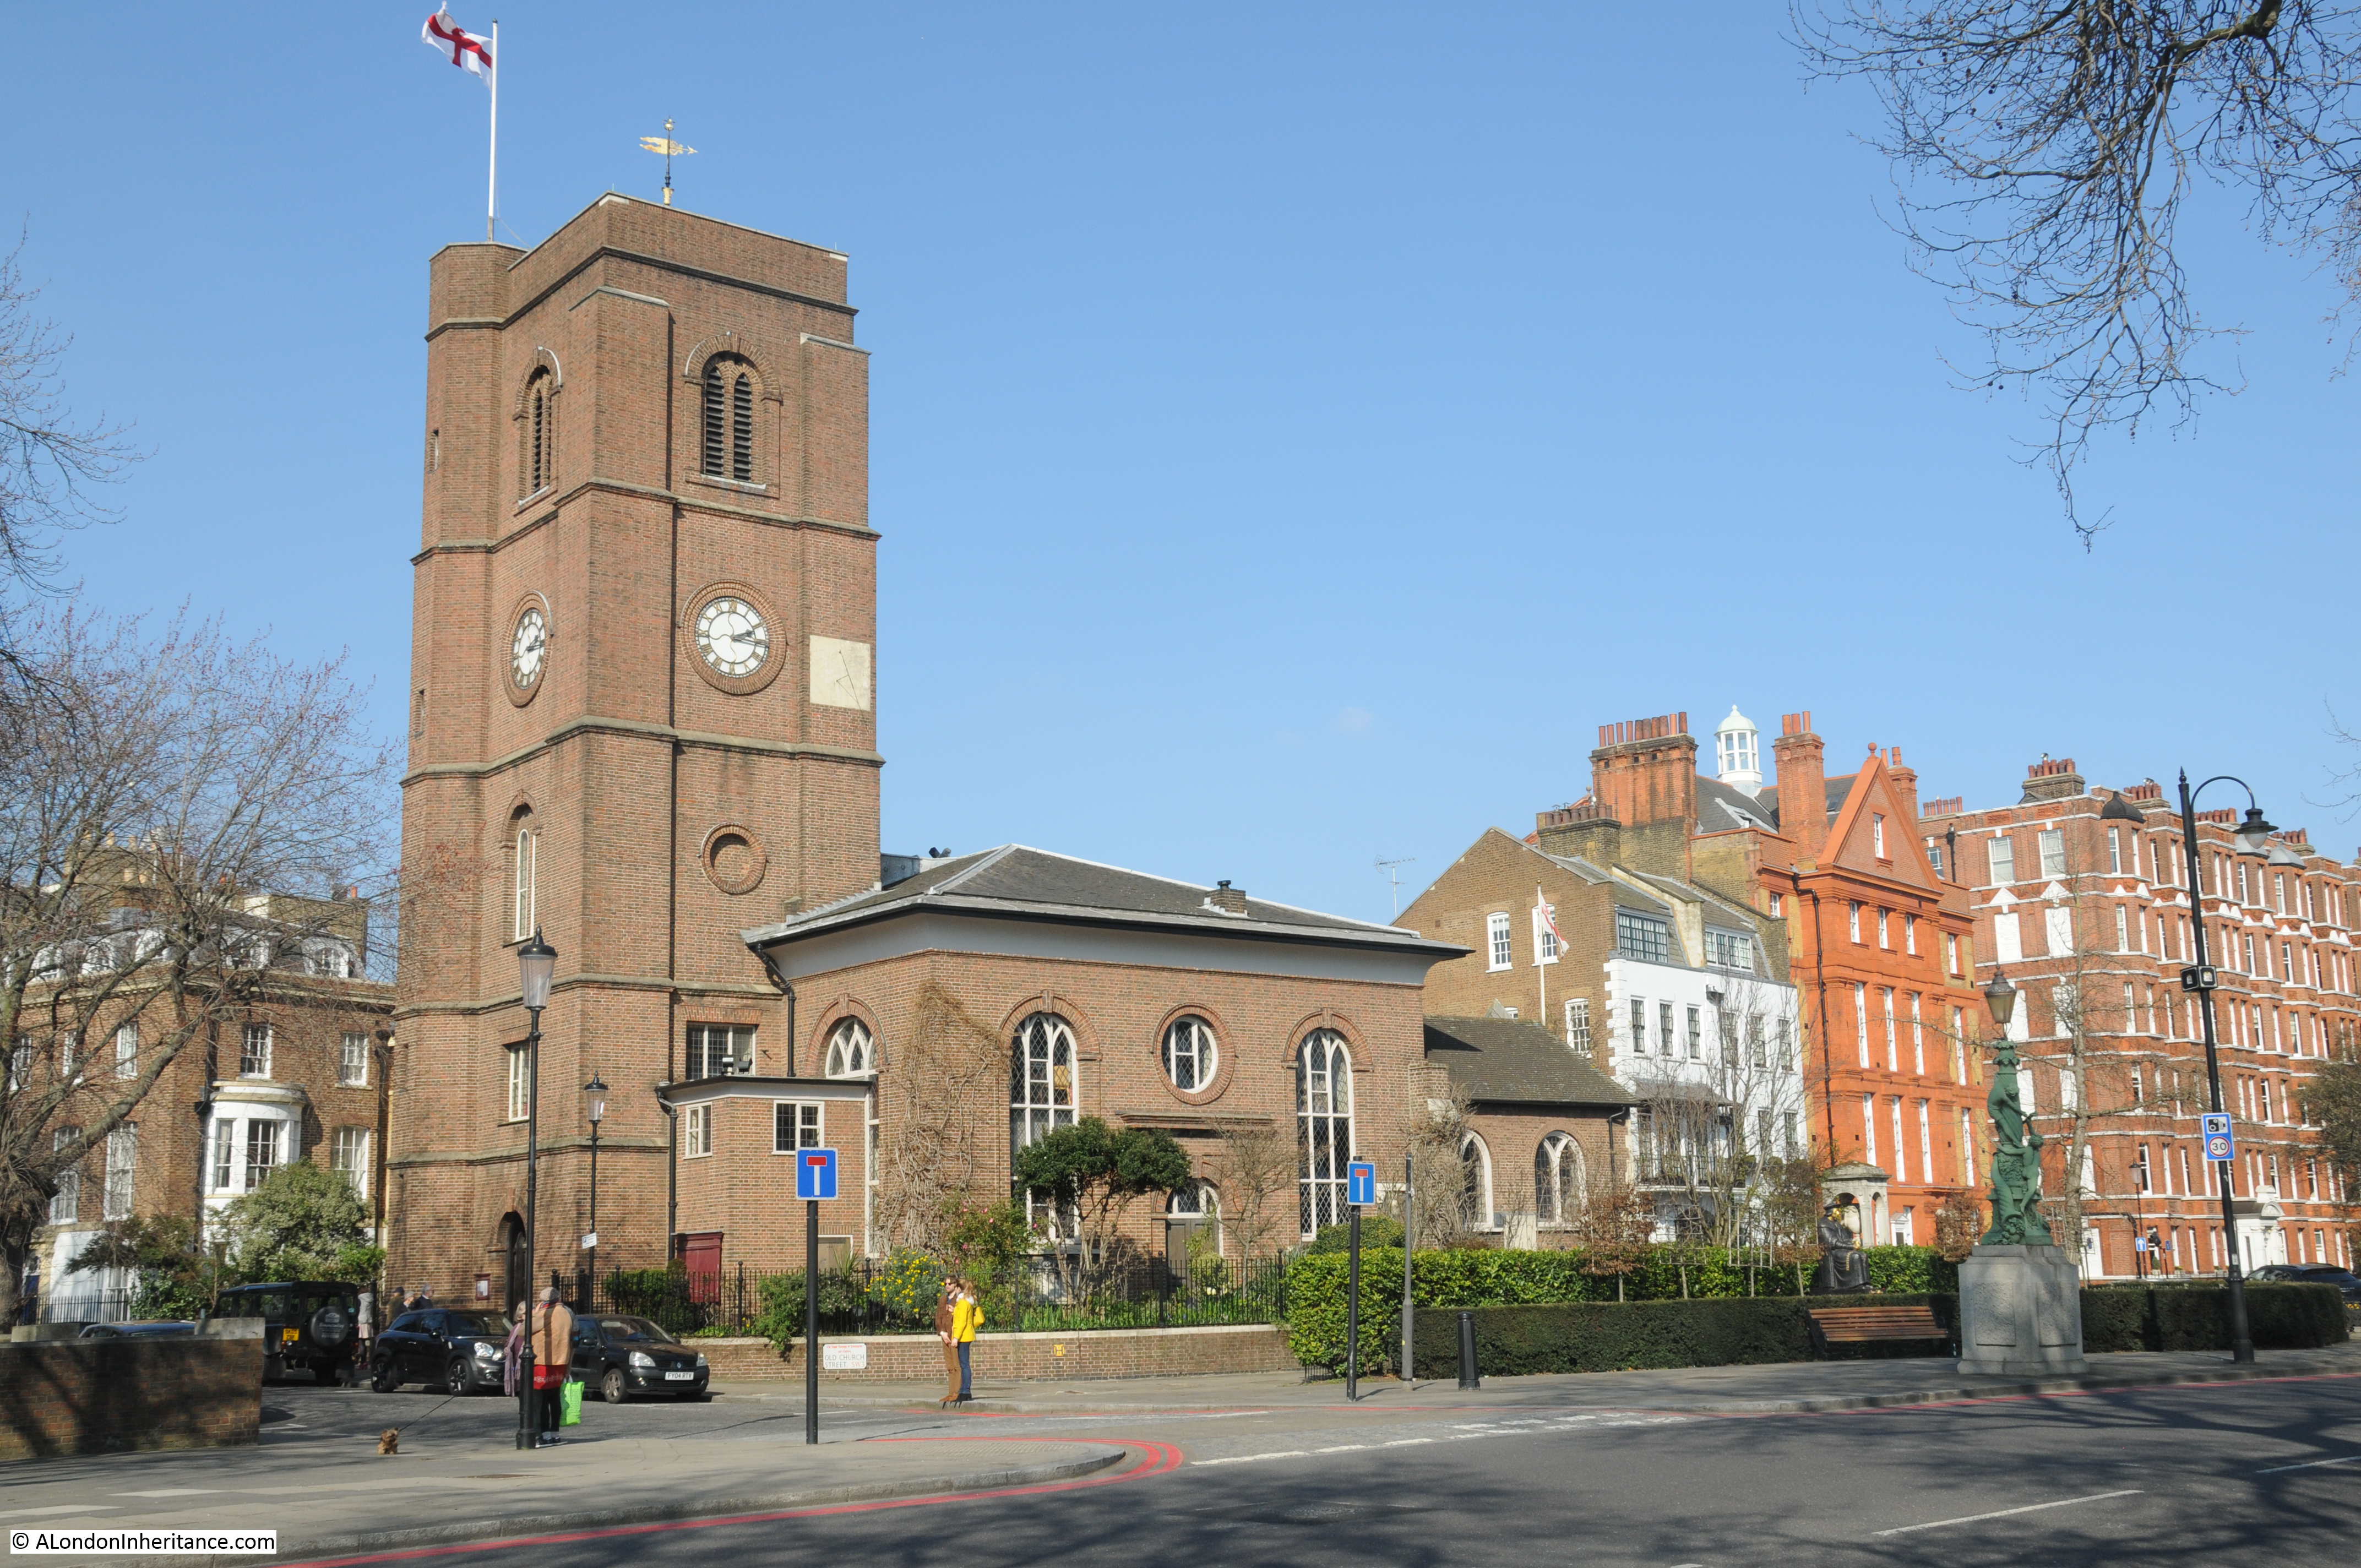 Chelsea Old Church - A London Inheritance